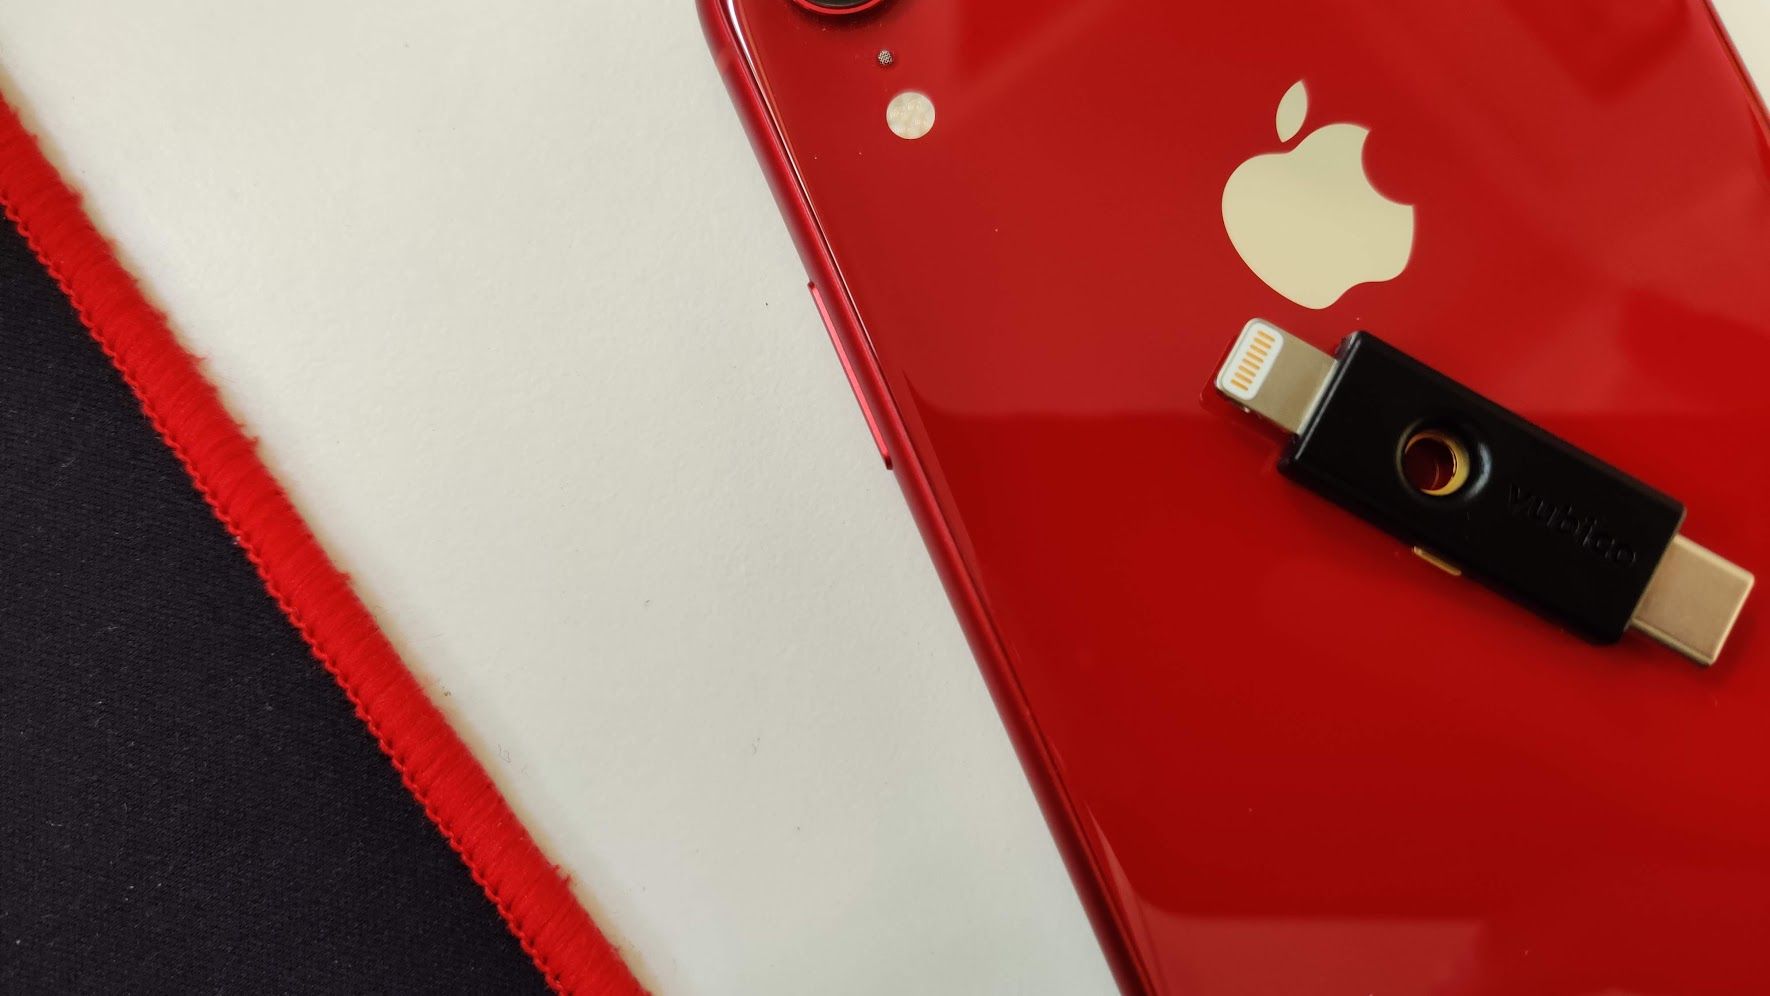 A Black Yubikey 5Ci on a red iPhone